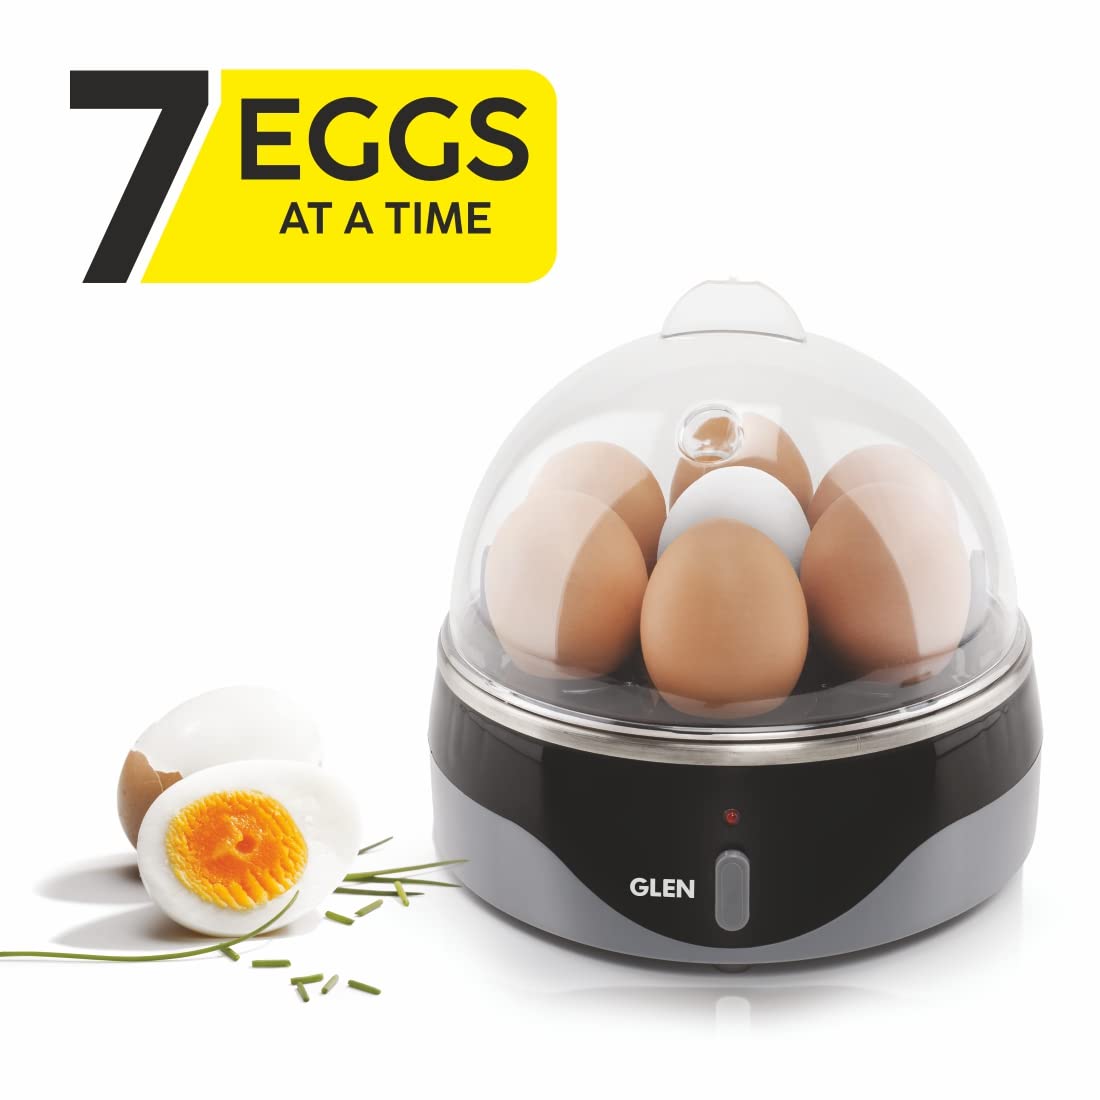 Glen Egg Boiler Boils 7 Eggs, 1 Poaching Cup, Auto shut Off, 350 Watts (SA-3030) - Grey - Mahajan Electronics Online